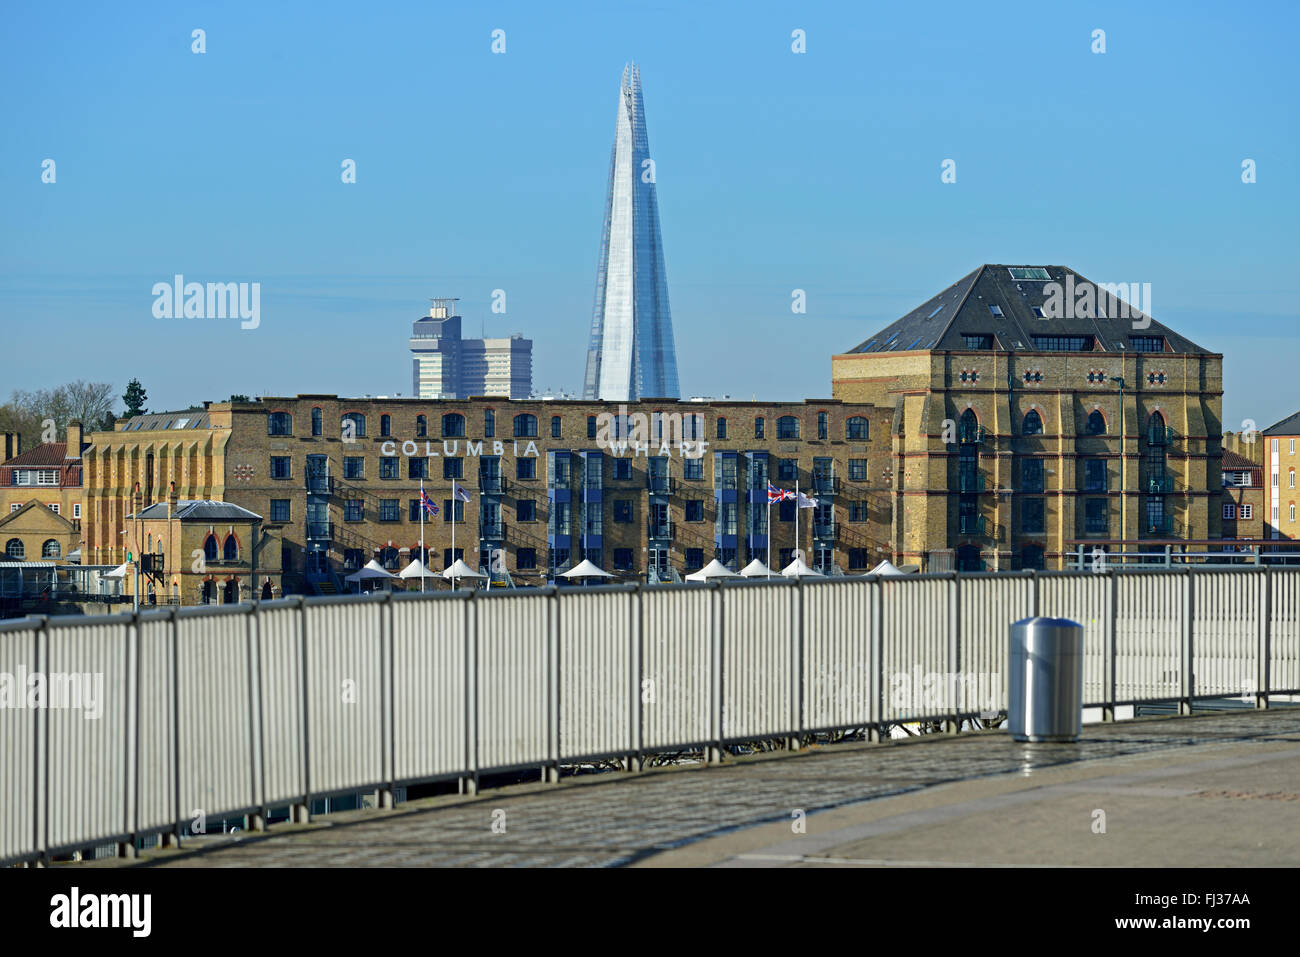 Columbia Wharf and the Shard, Canary Riverside, London, United Kingdom Stock Photo